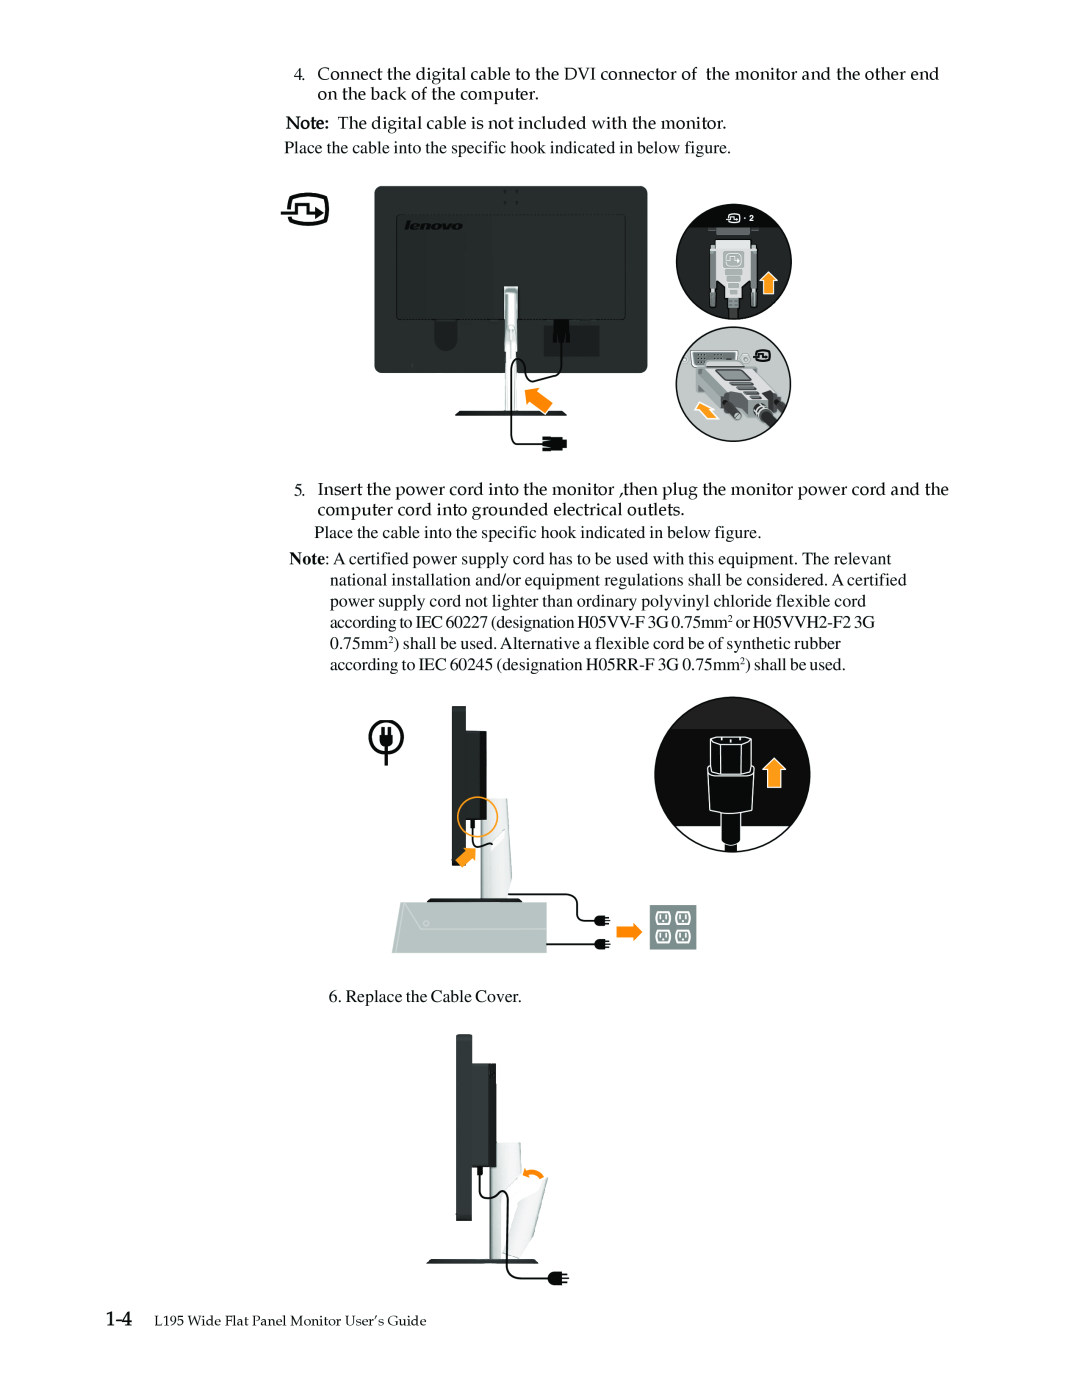 Lenovo L195 WIDE manual 1-4 L195 Wide Flat Panel Monitor User’s Guide 